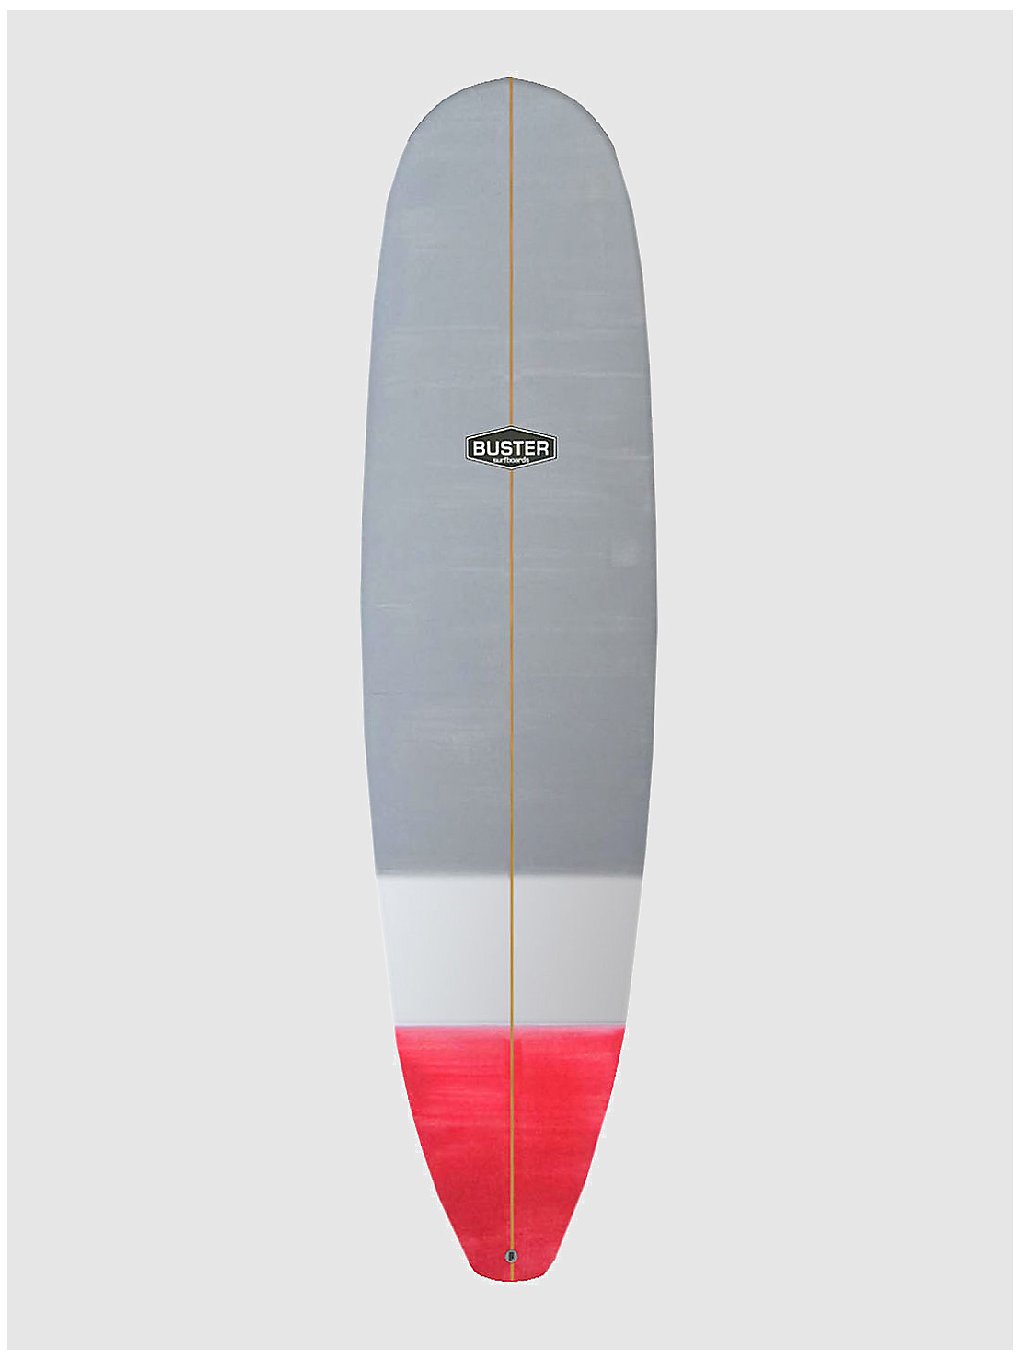 buster 76 mini malibu surfboard schwarz weiss/blau/schwarz